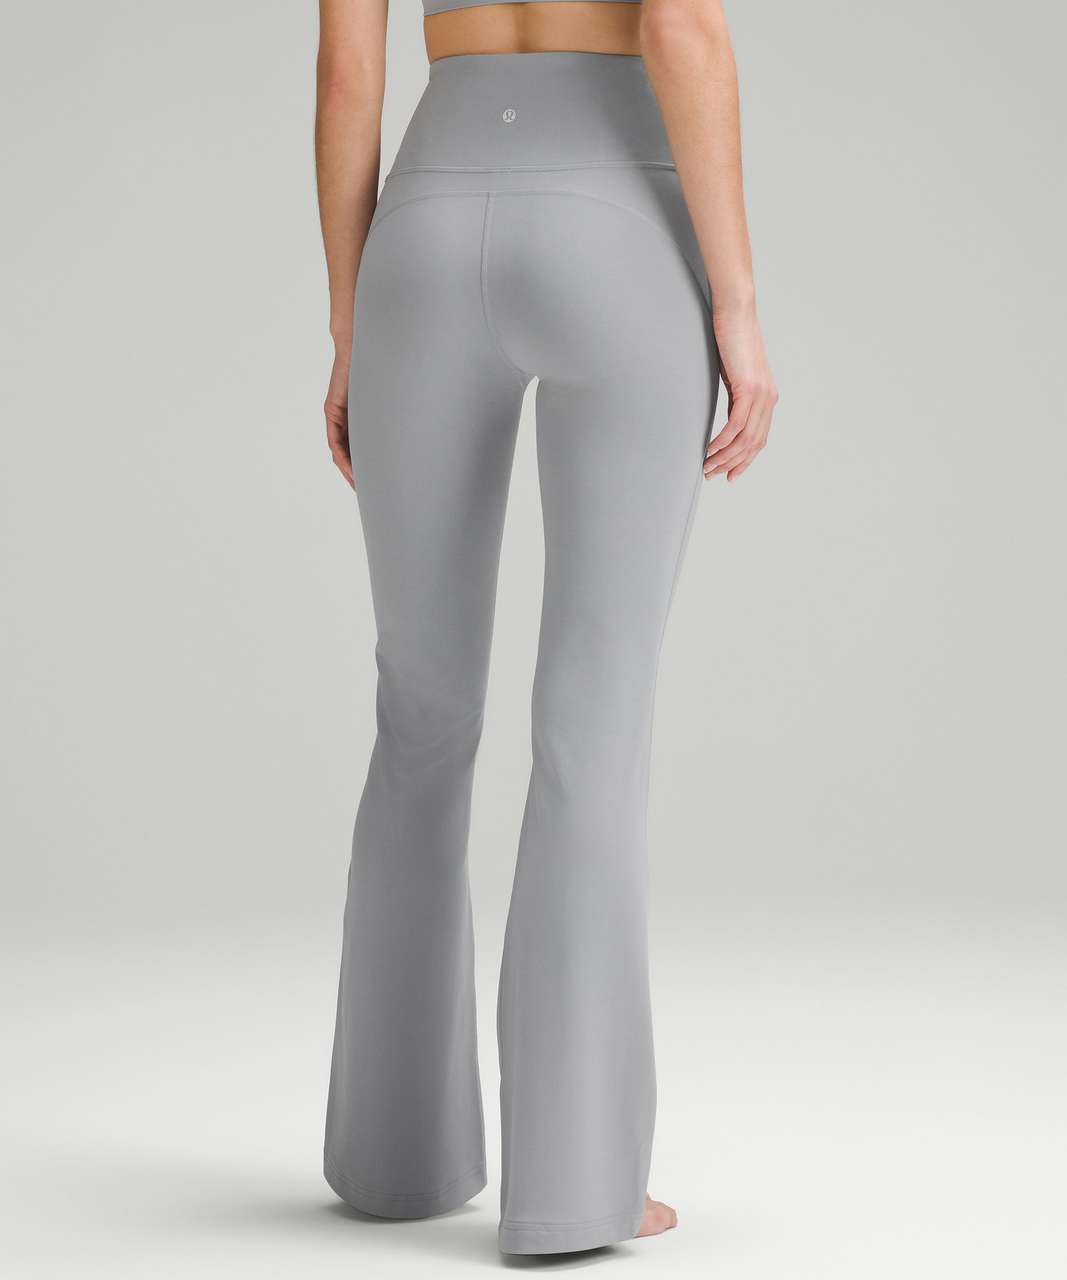 lululemon - Lululemon Groove Pants In Grey on Designer Wardrobe